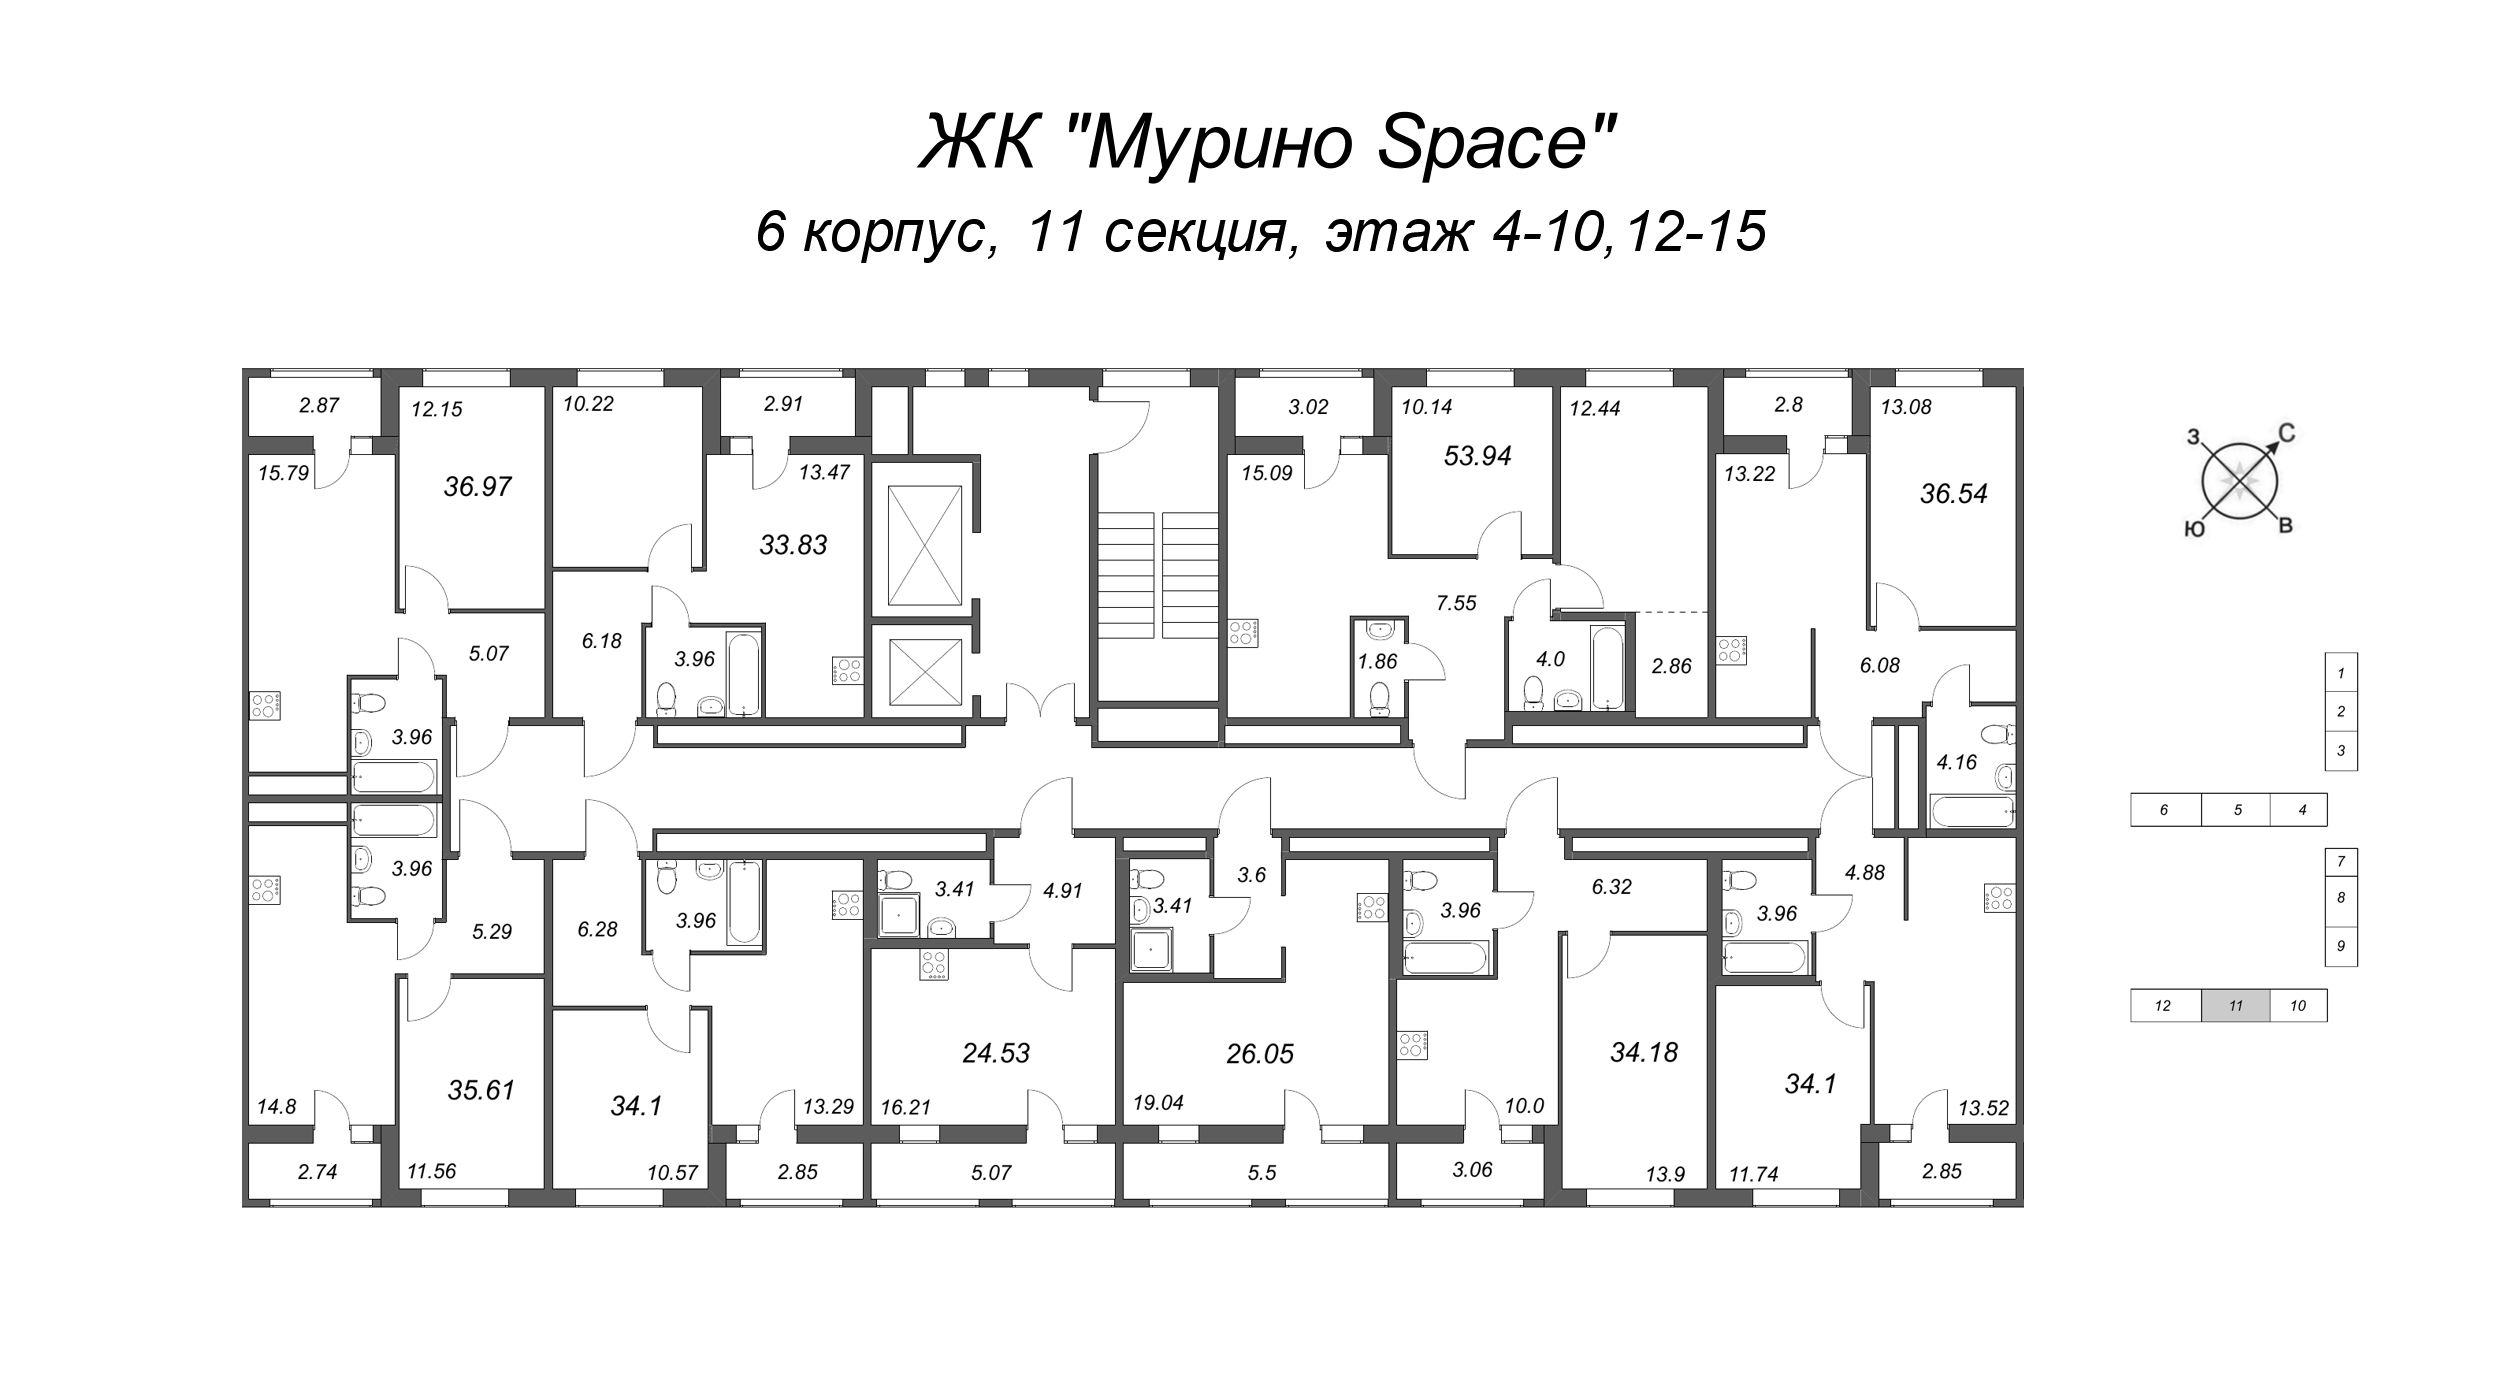 3-комнатная (Евро) квартира, 53.94 м² - планировка этажа